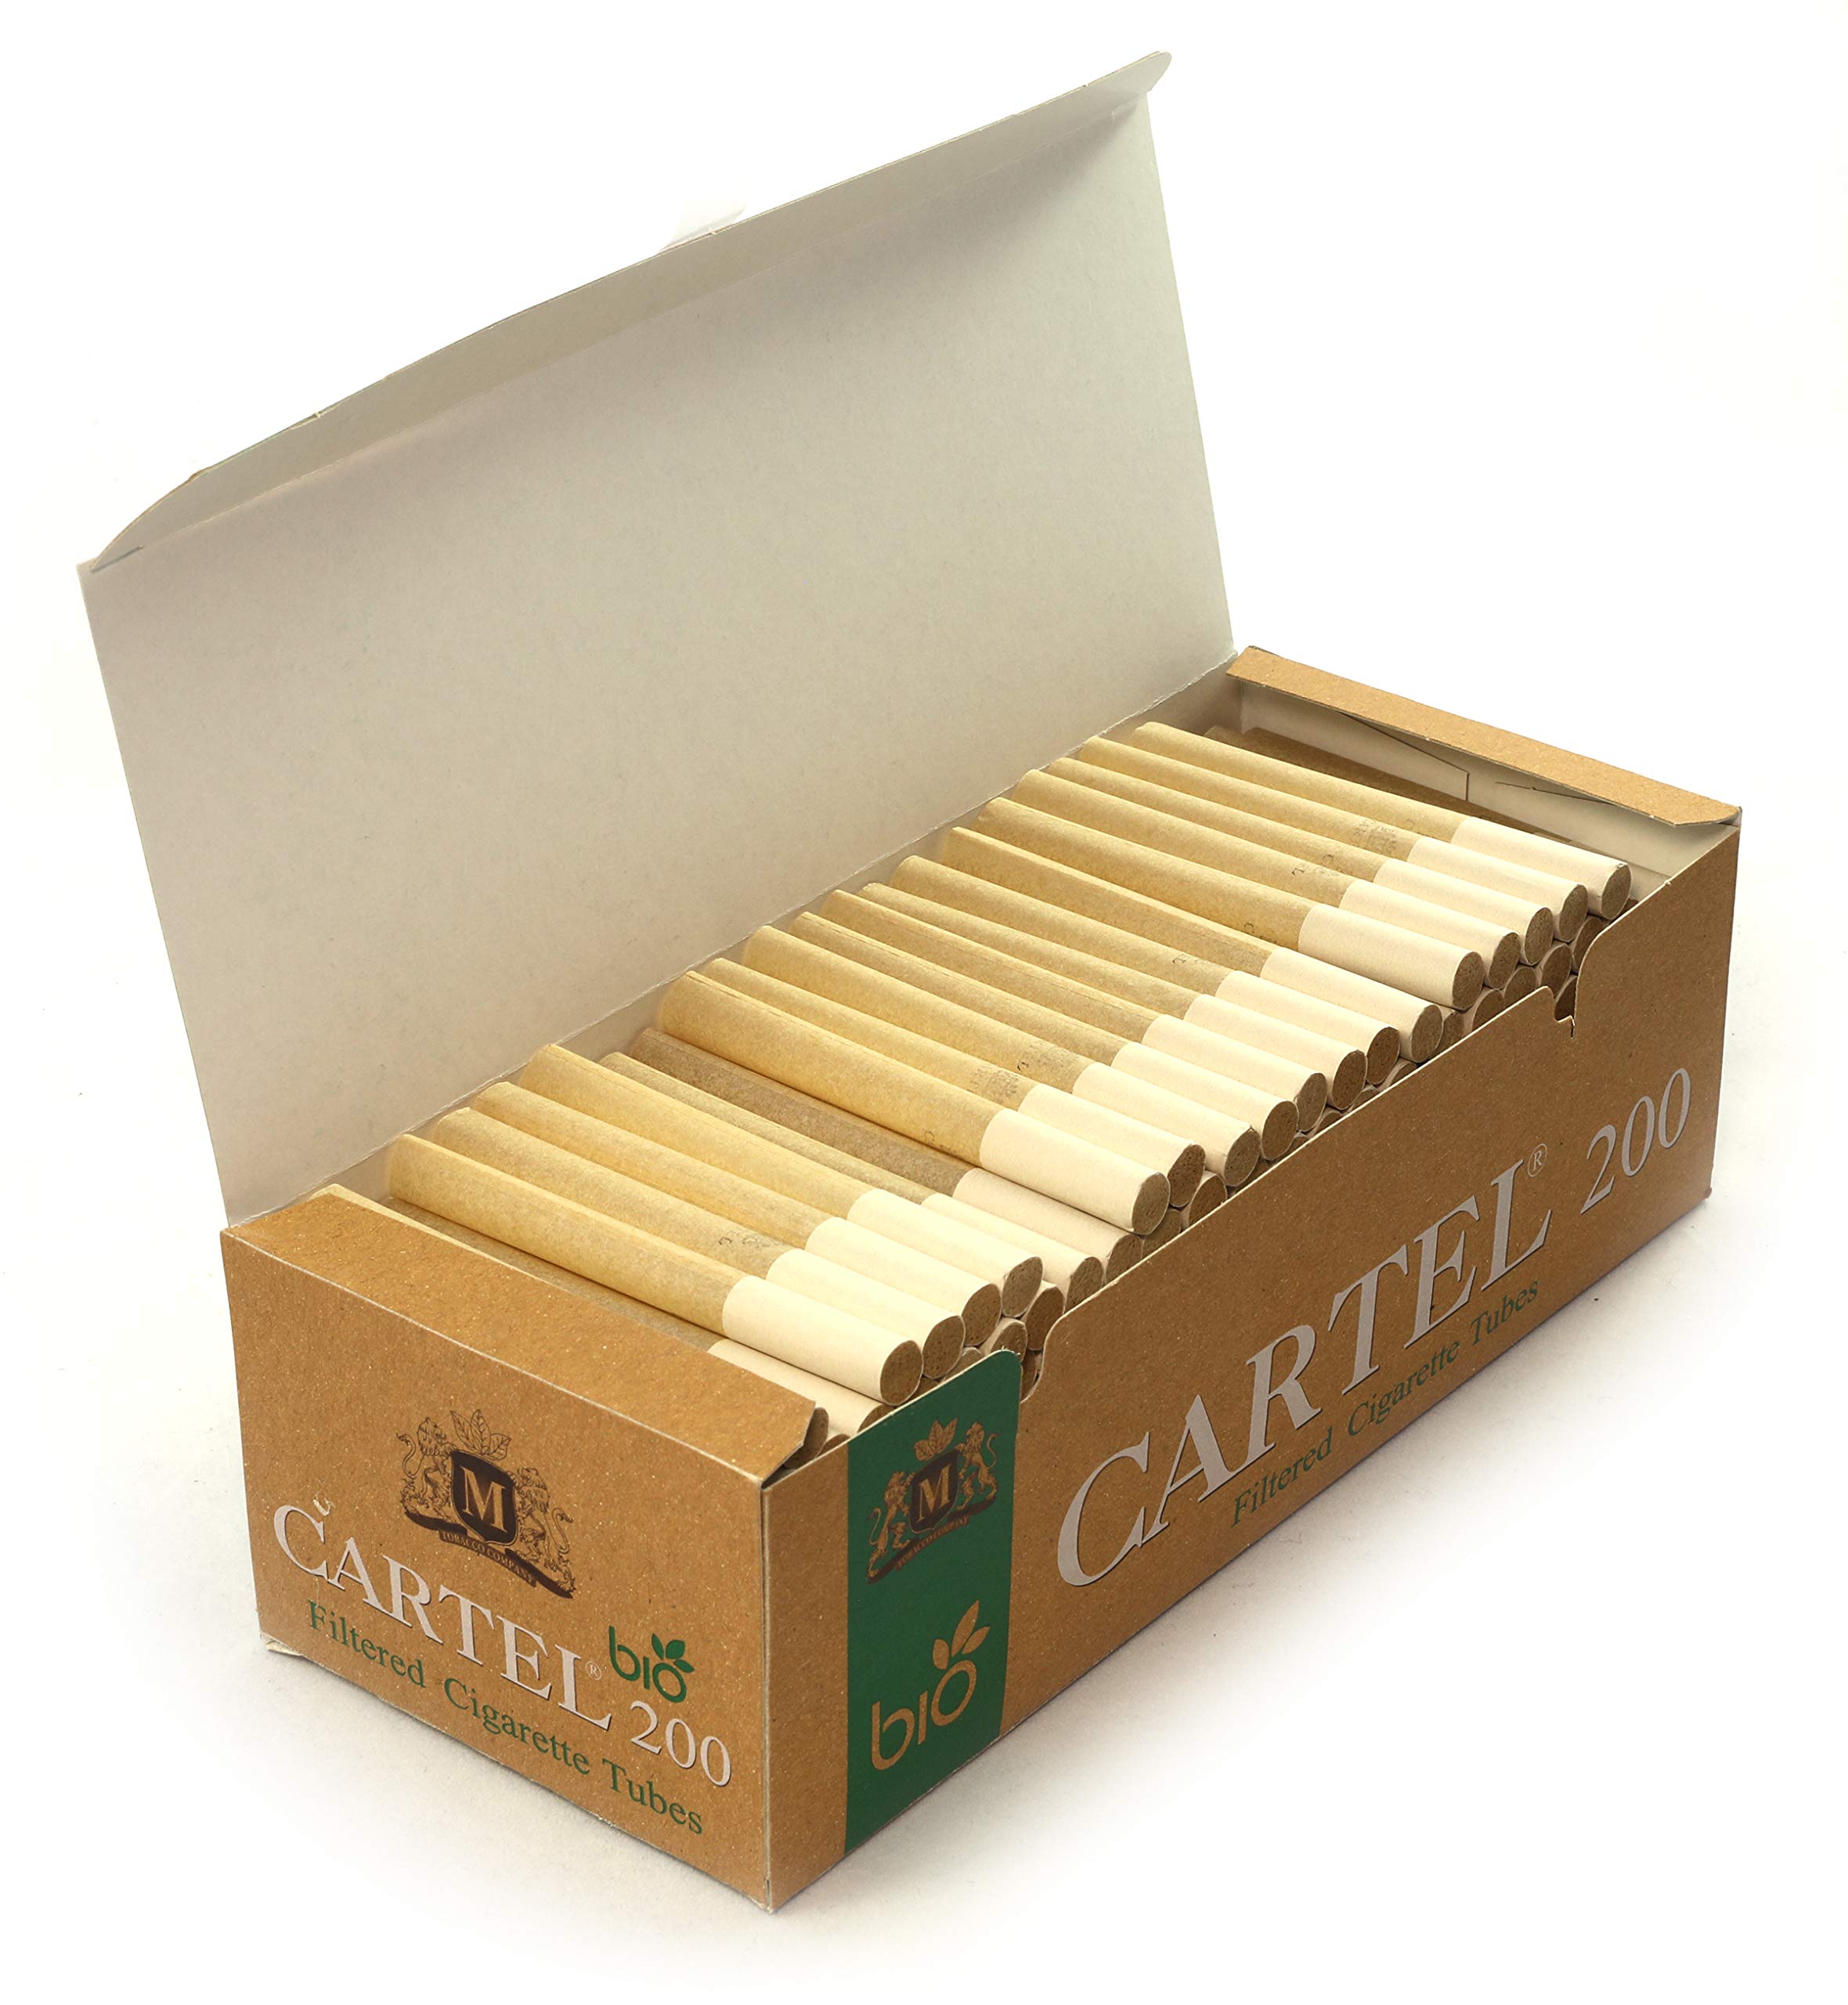 cigarette casings